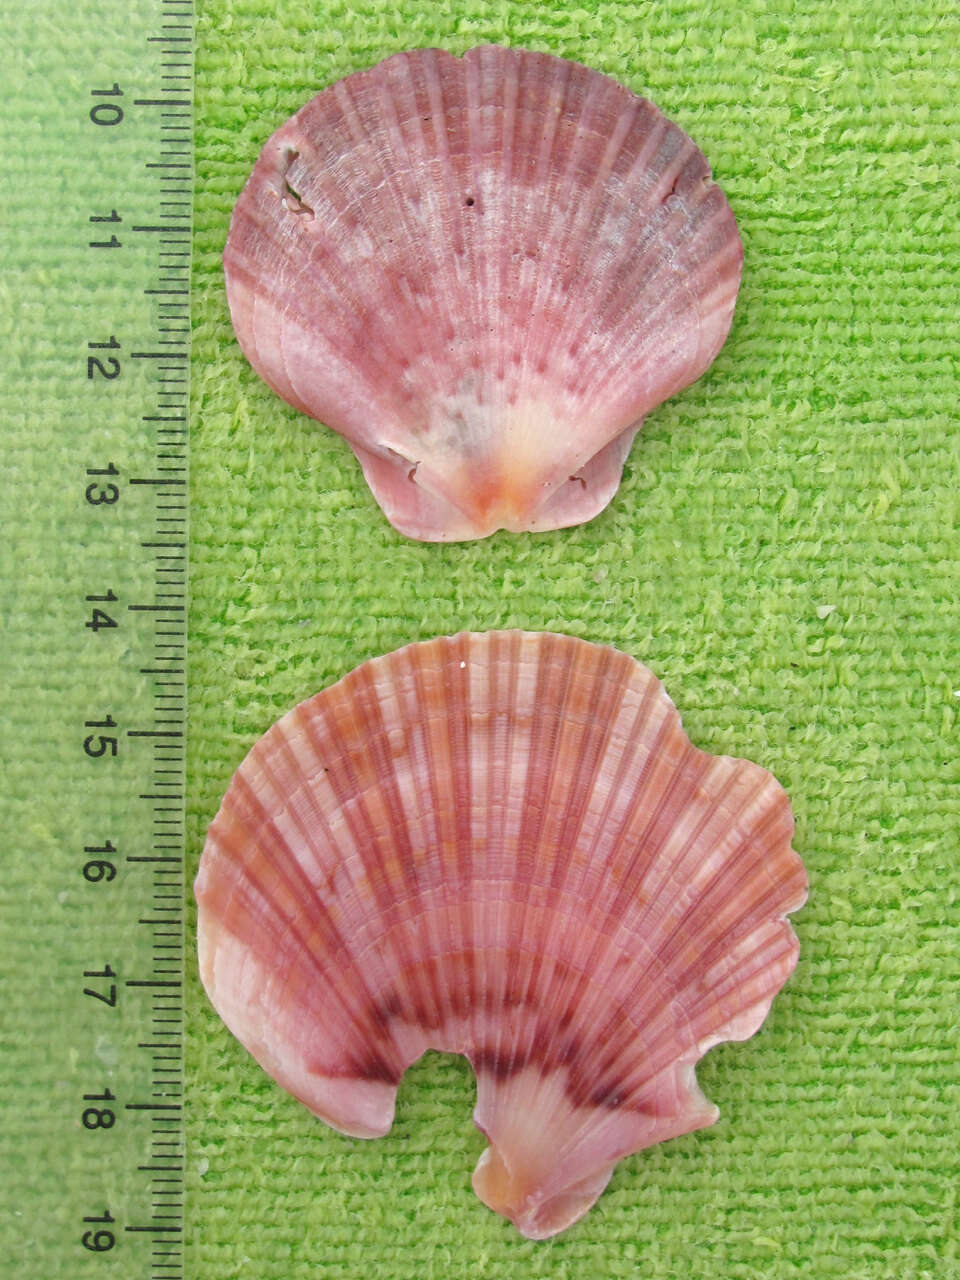 Image of Bermuda sand scallop